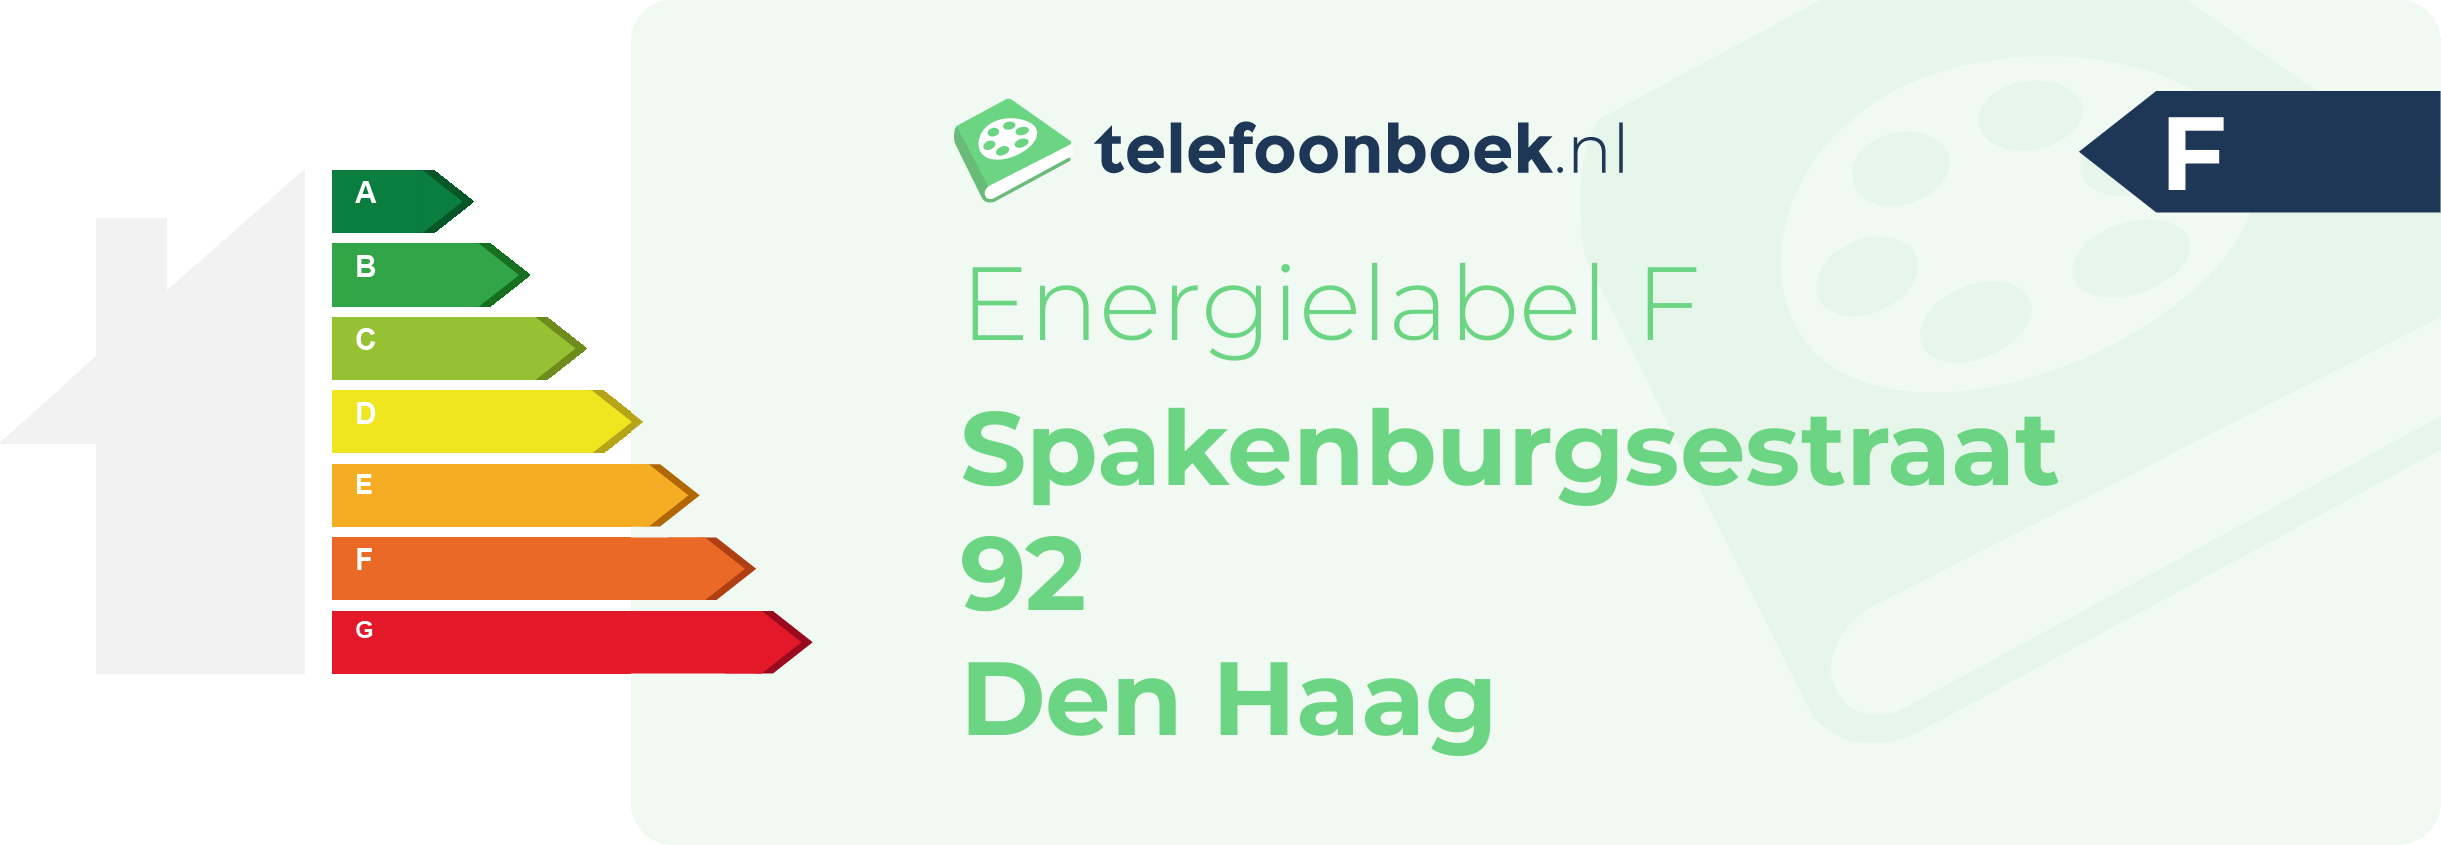 Energielabel Spakenburgsestraat 92 Den Haag